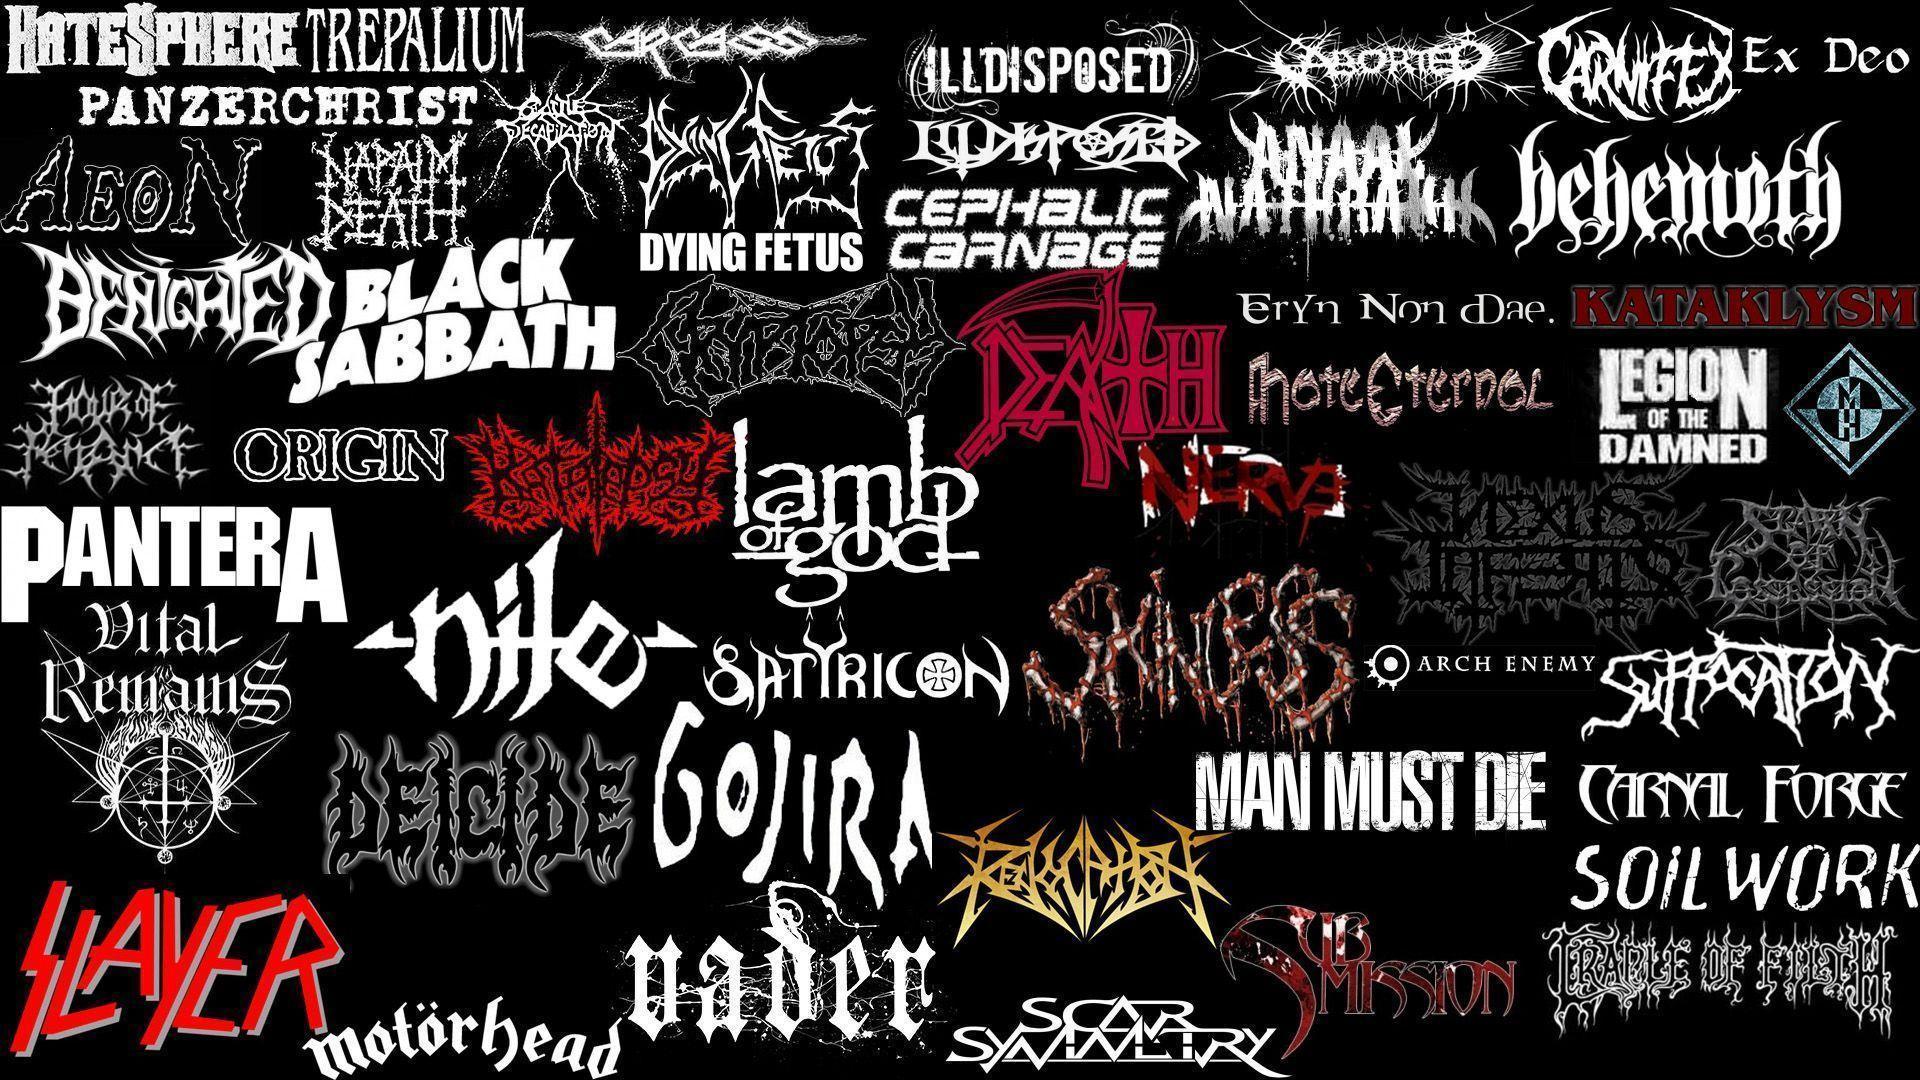 Metal Band Wallpapers